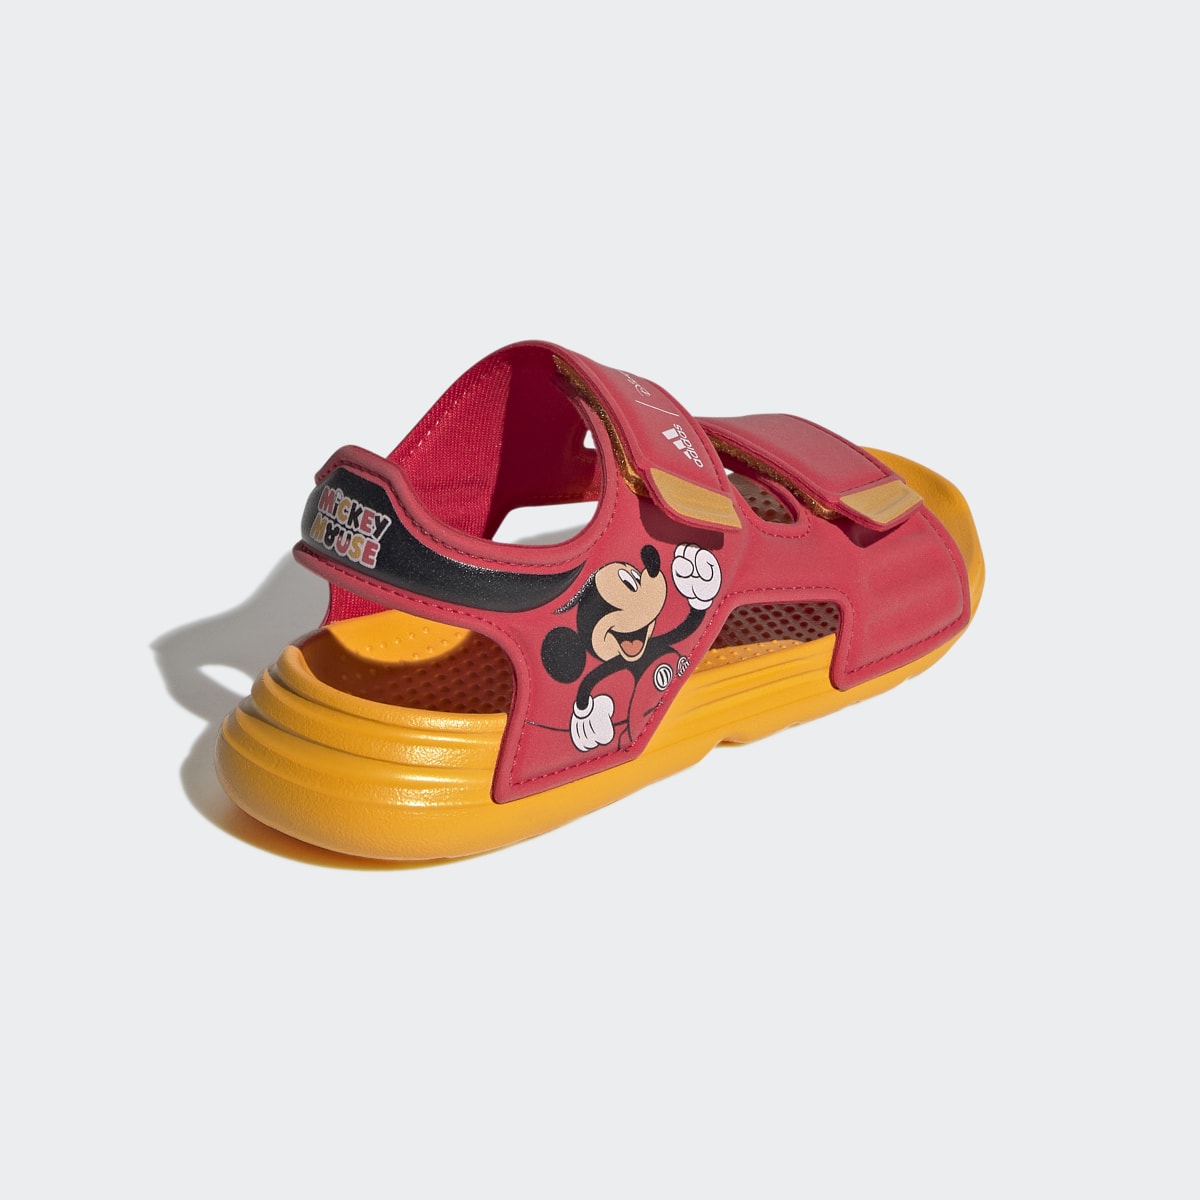 Adidas x Disney Mickey Mouse AltaSwim Sandals. 6